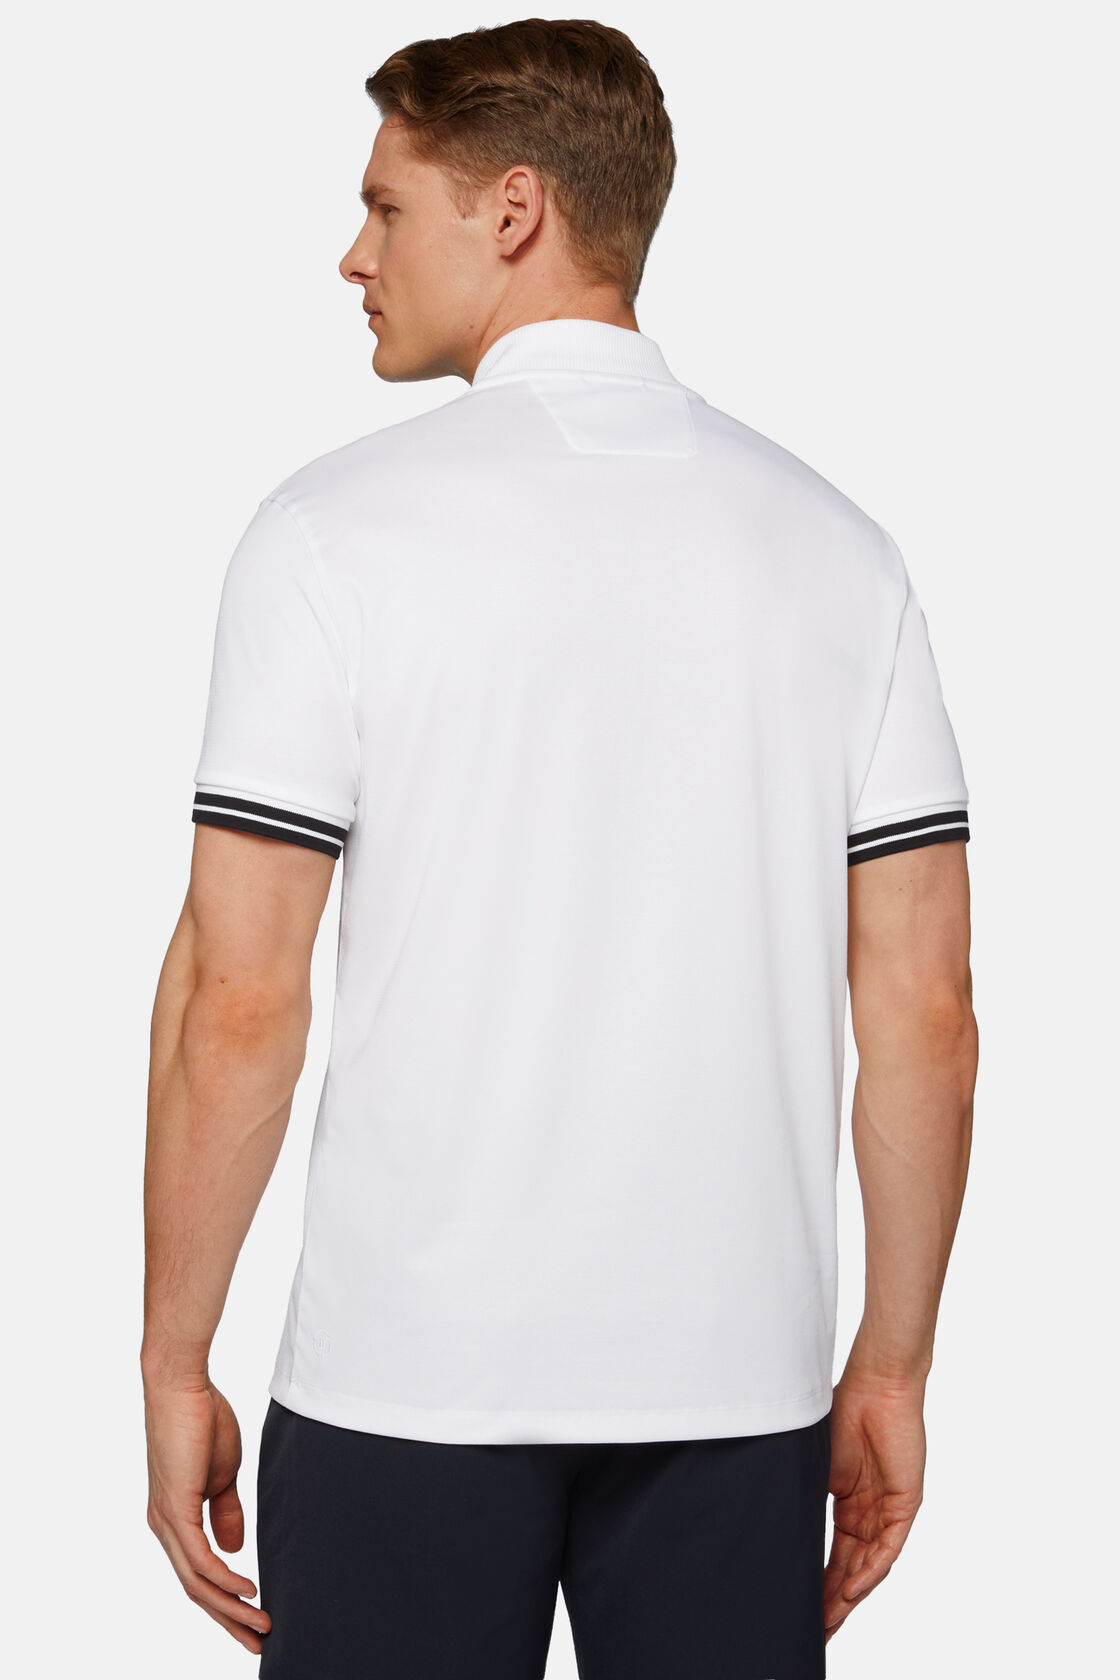 Poloshirt van high-performance stof, White, hi-res